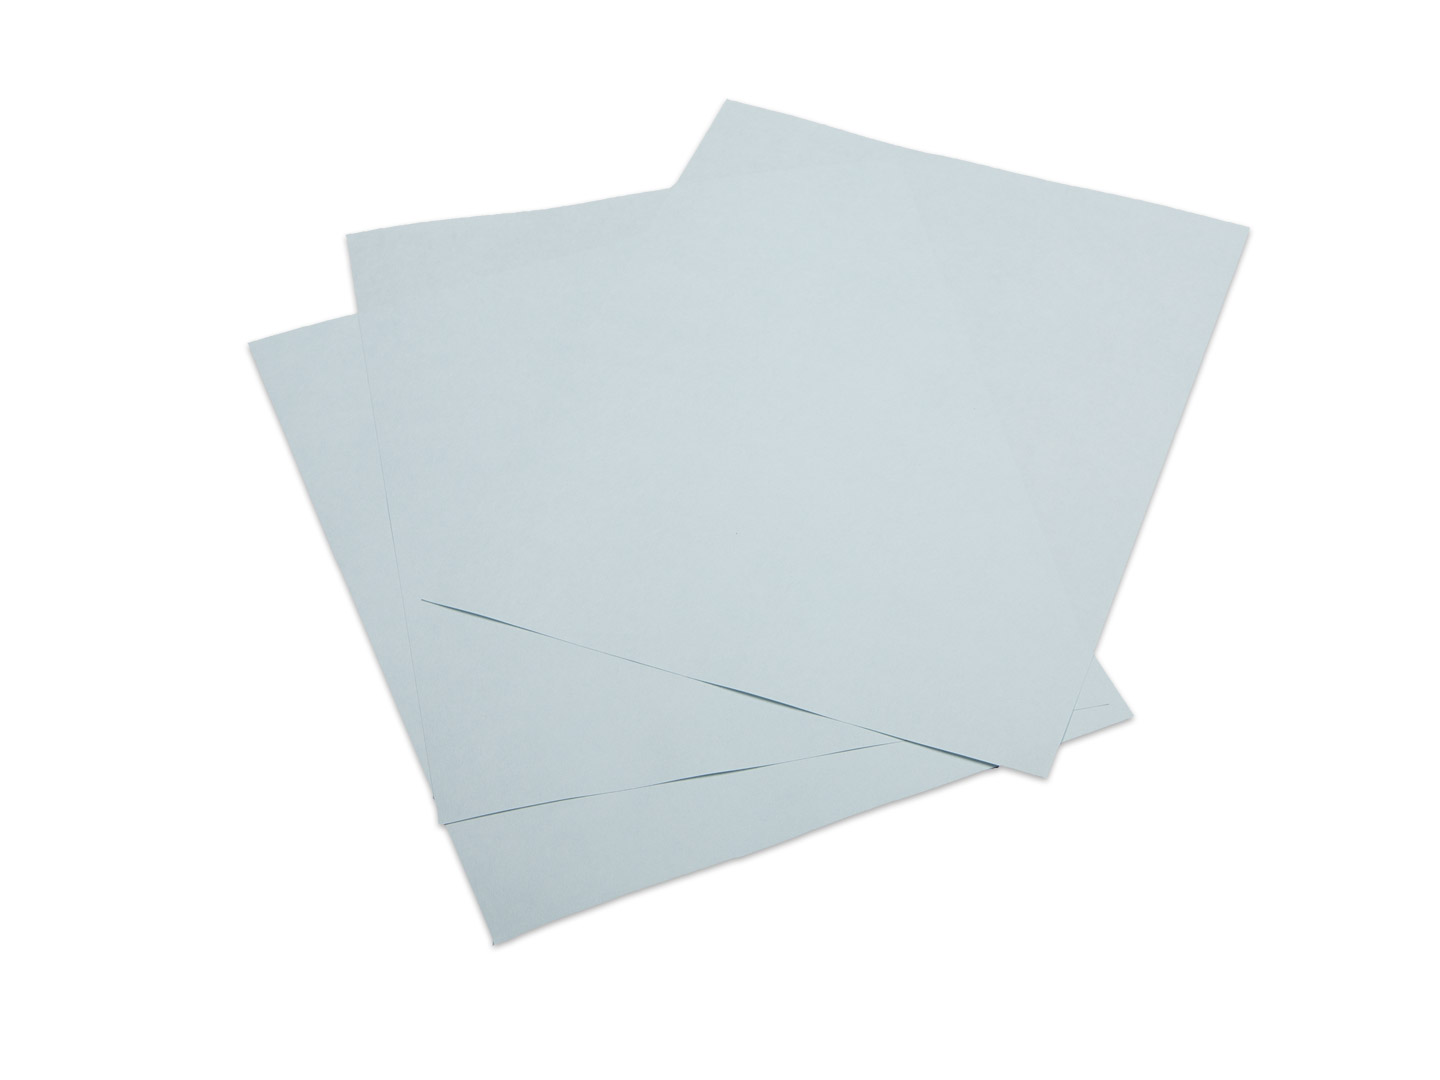 BCR™ Bond 850 Cleanroom Copy Paper, 8-1/2 x 11, Pink, 250 Sheet per